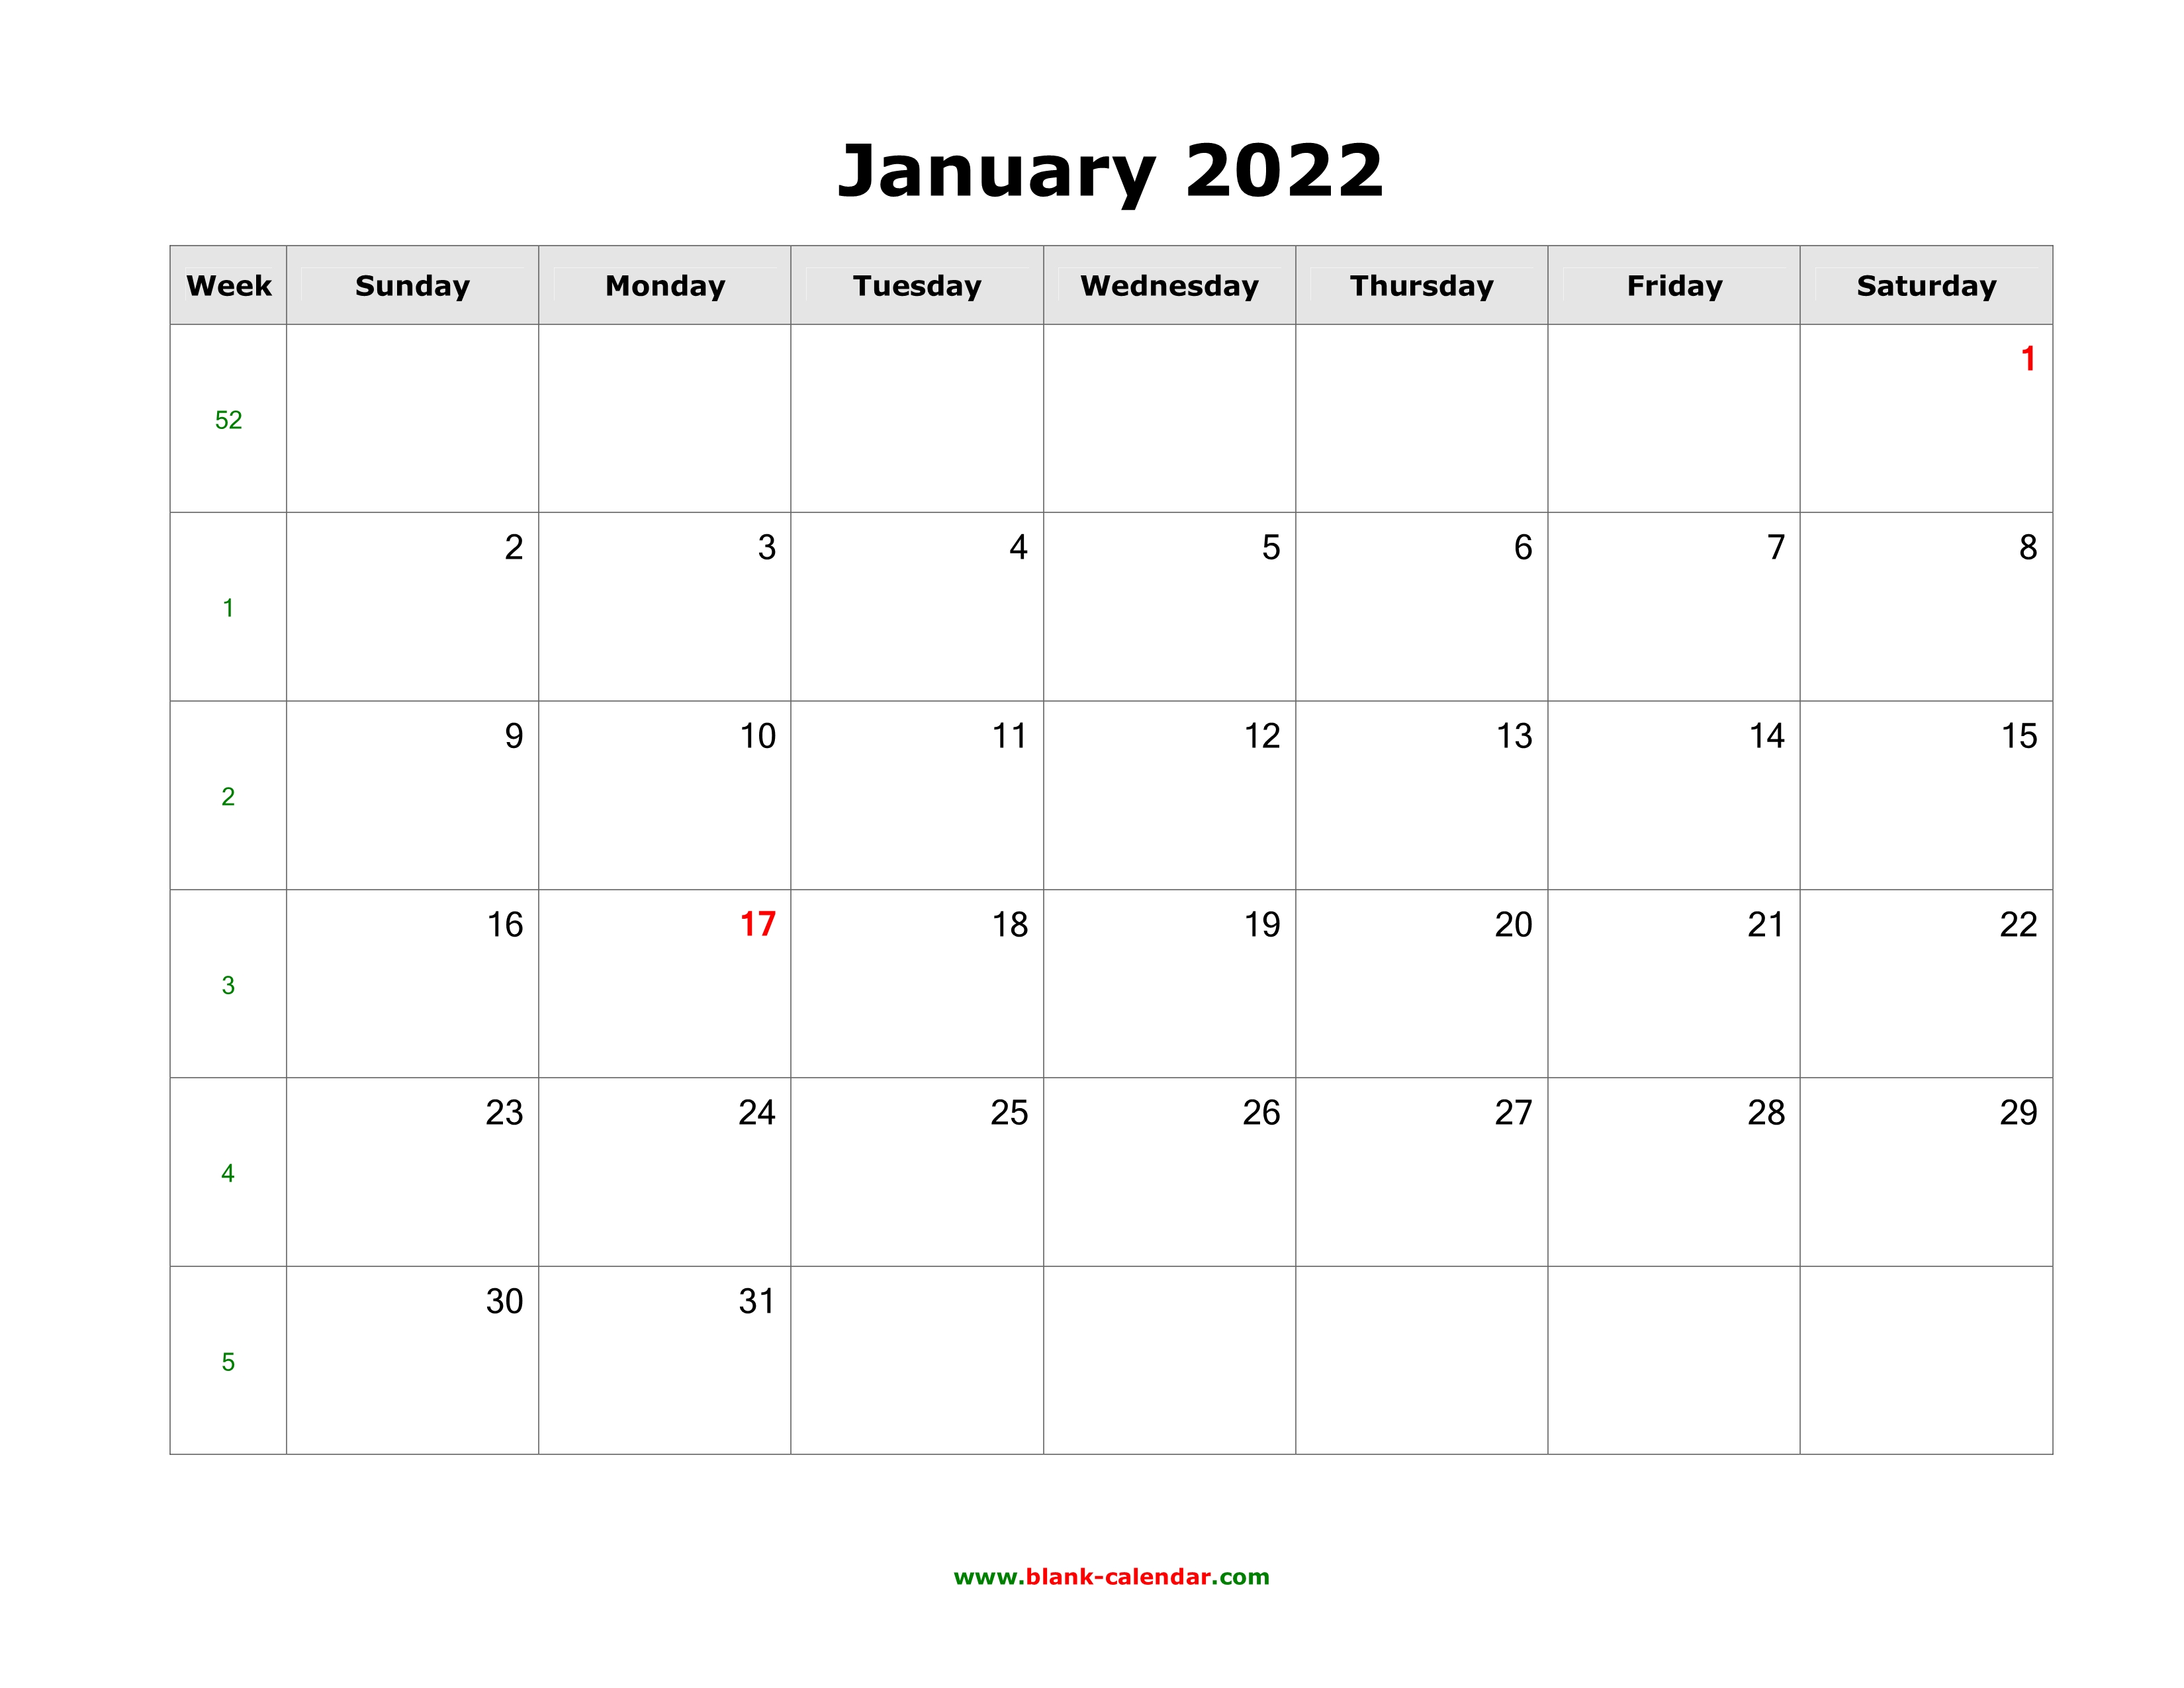 Download January 2022 Blank Calendar (Horizontal)